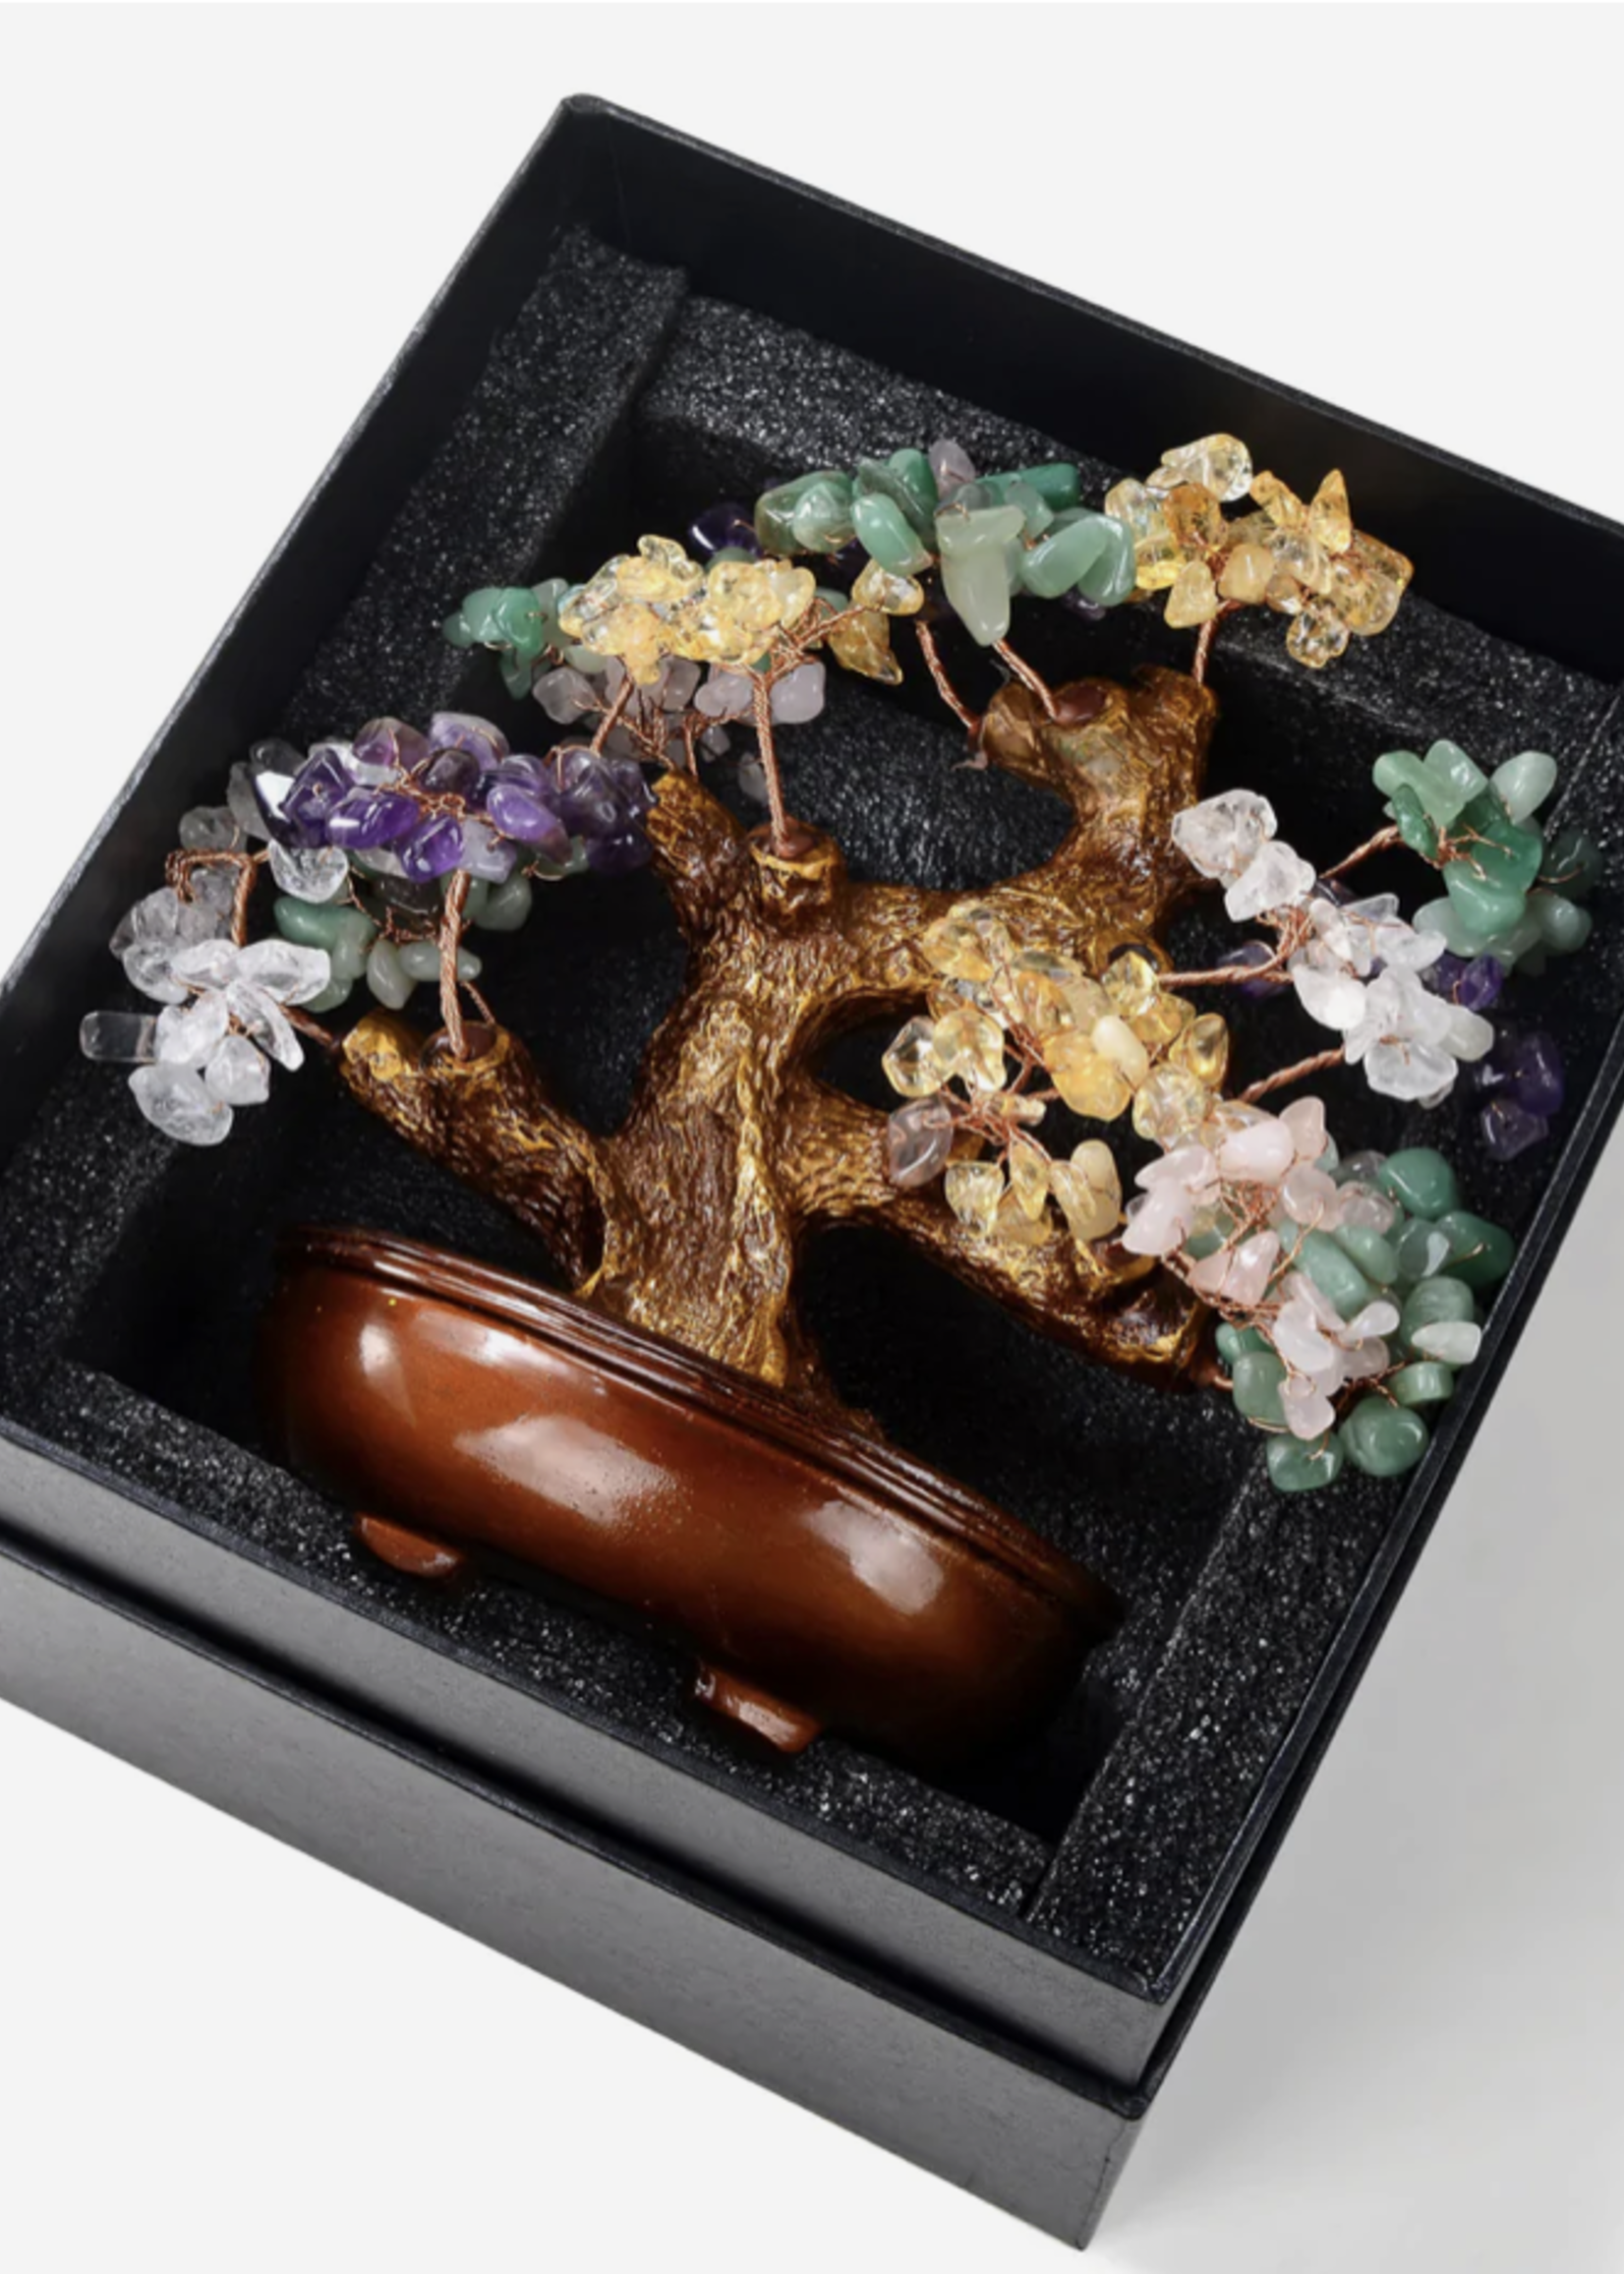 Multi-Gemstone Bonsai Tree of Life with 360 Crystals